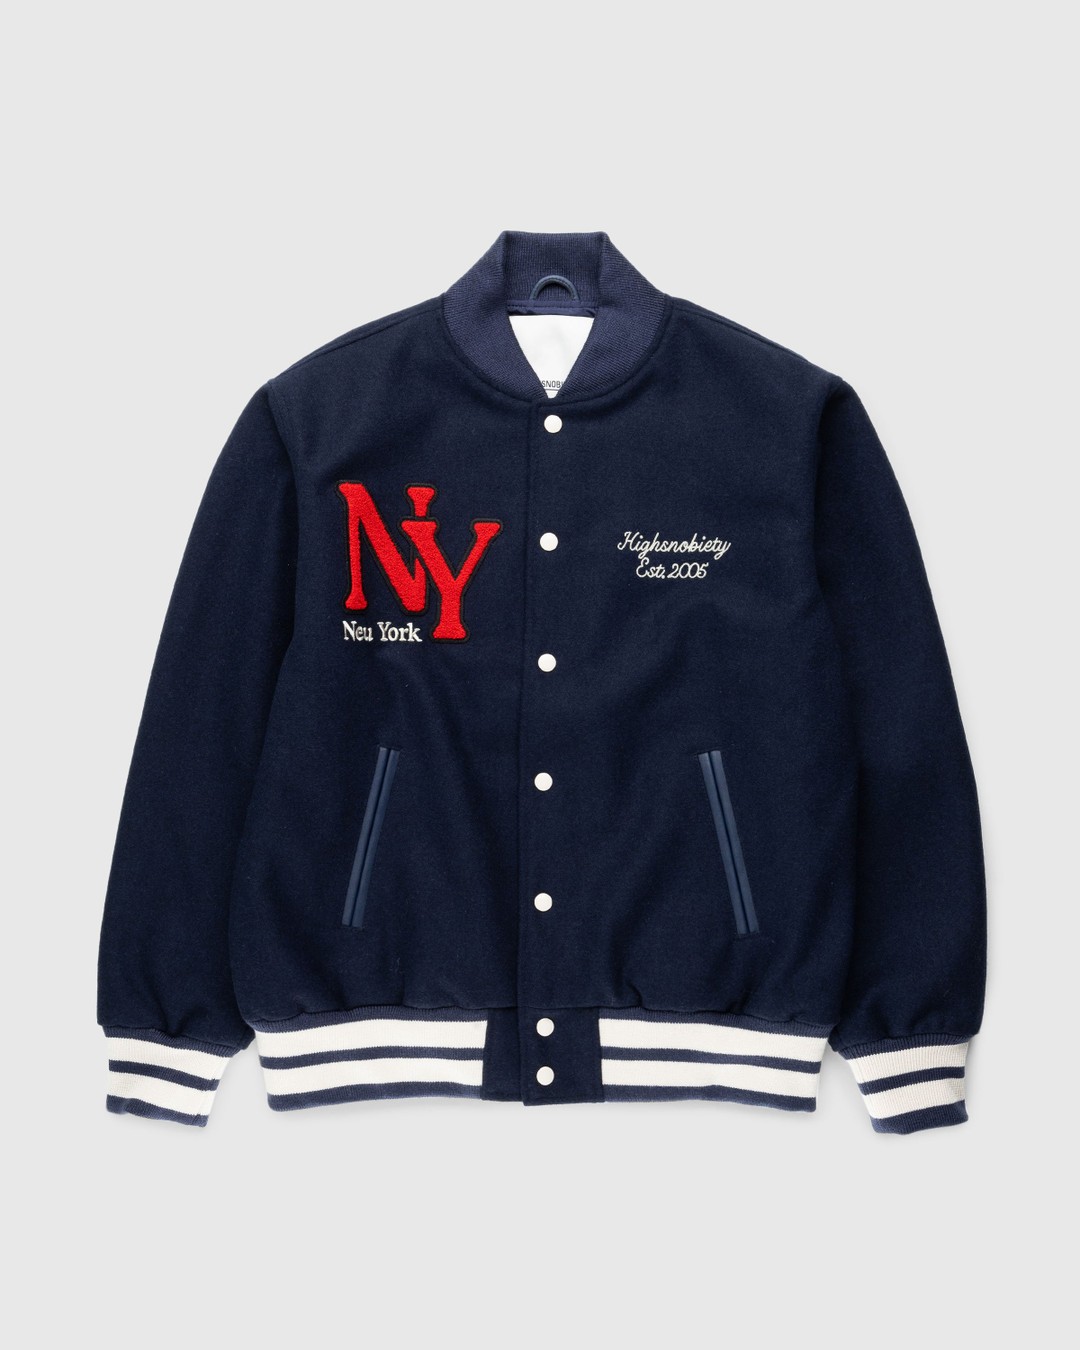 New York Yankees 90s Light Blue Varsity Jacket